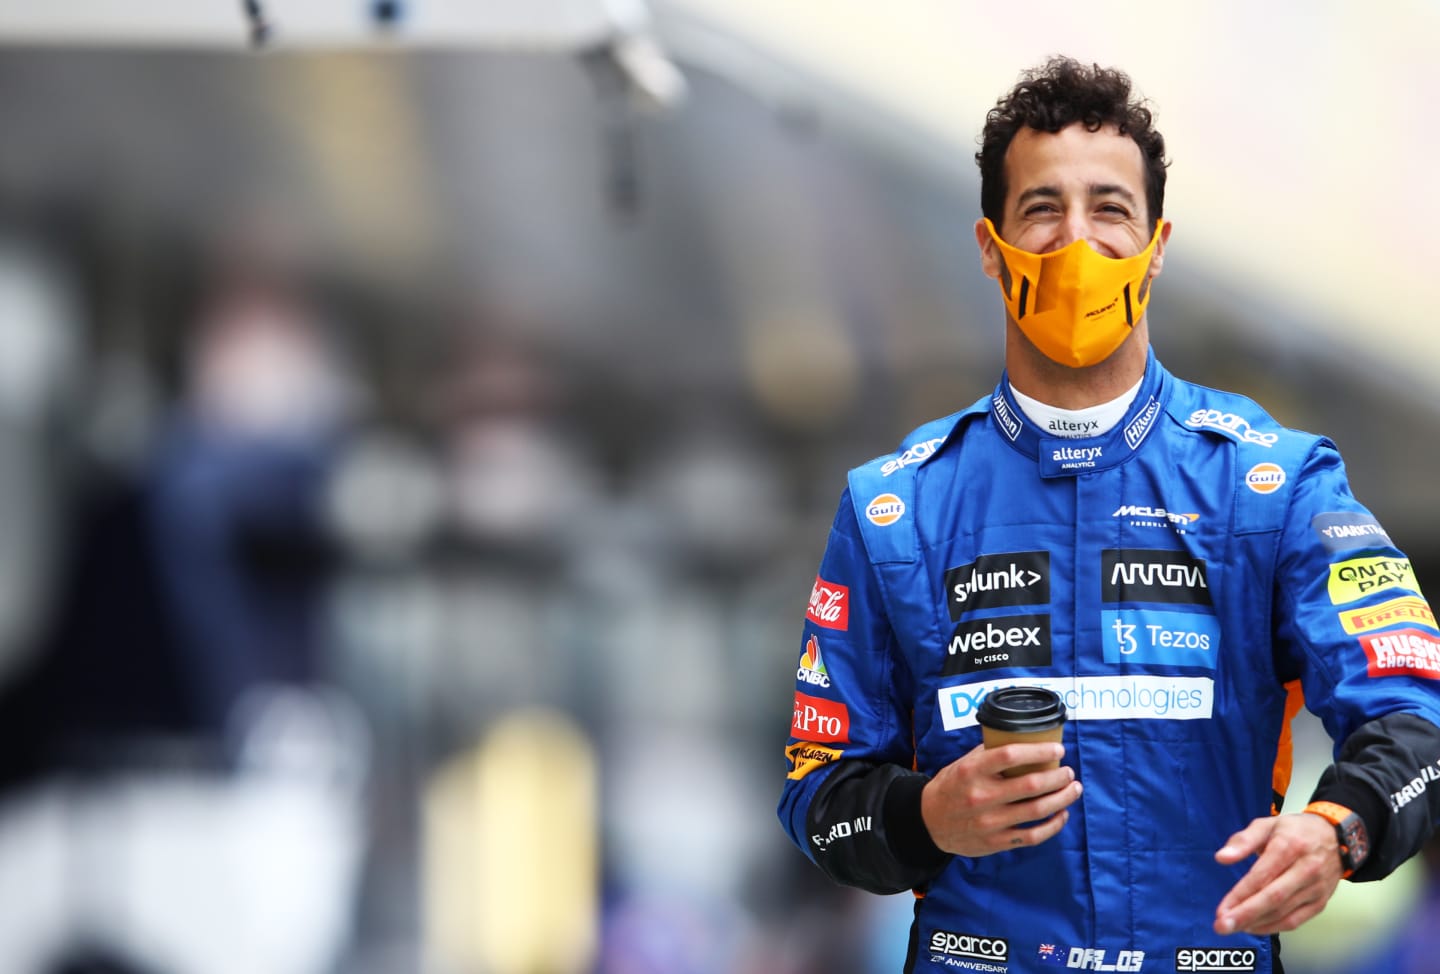 NORTHAMPTON, ENGLAND - JULY 15: Daniel Ricciardo of Australia and McLaren F1 looks on during